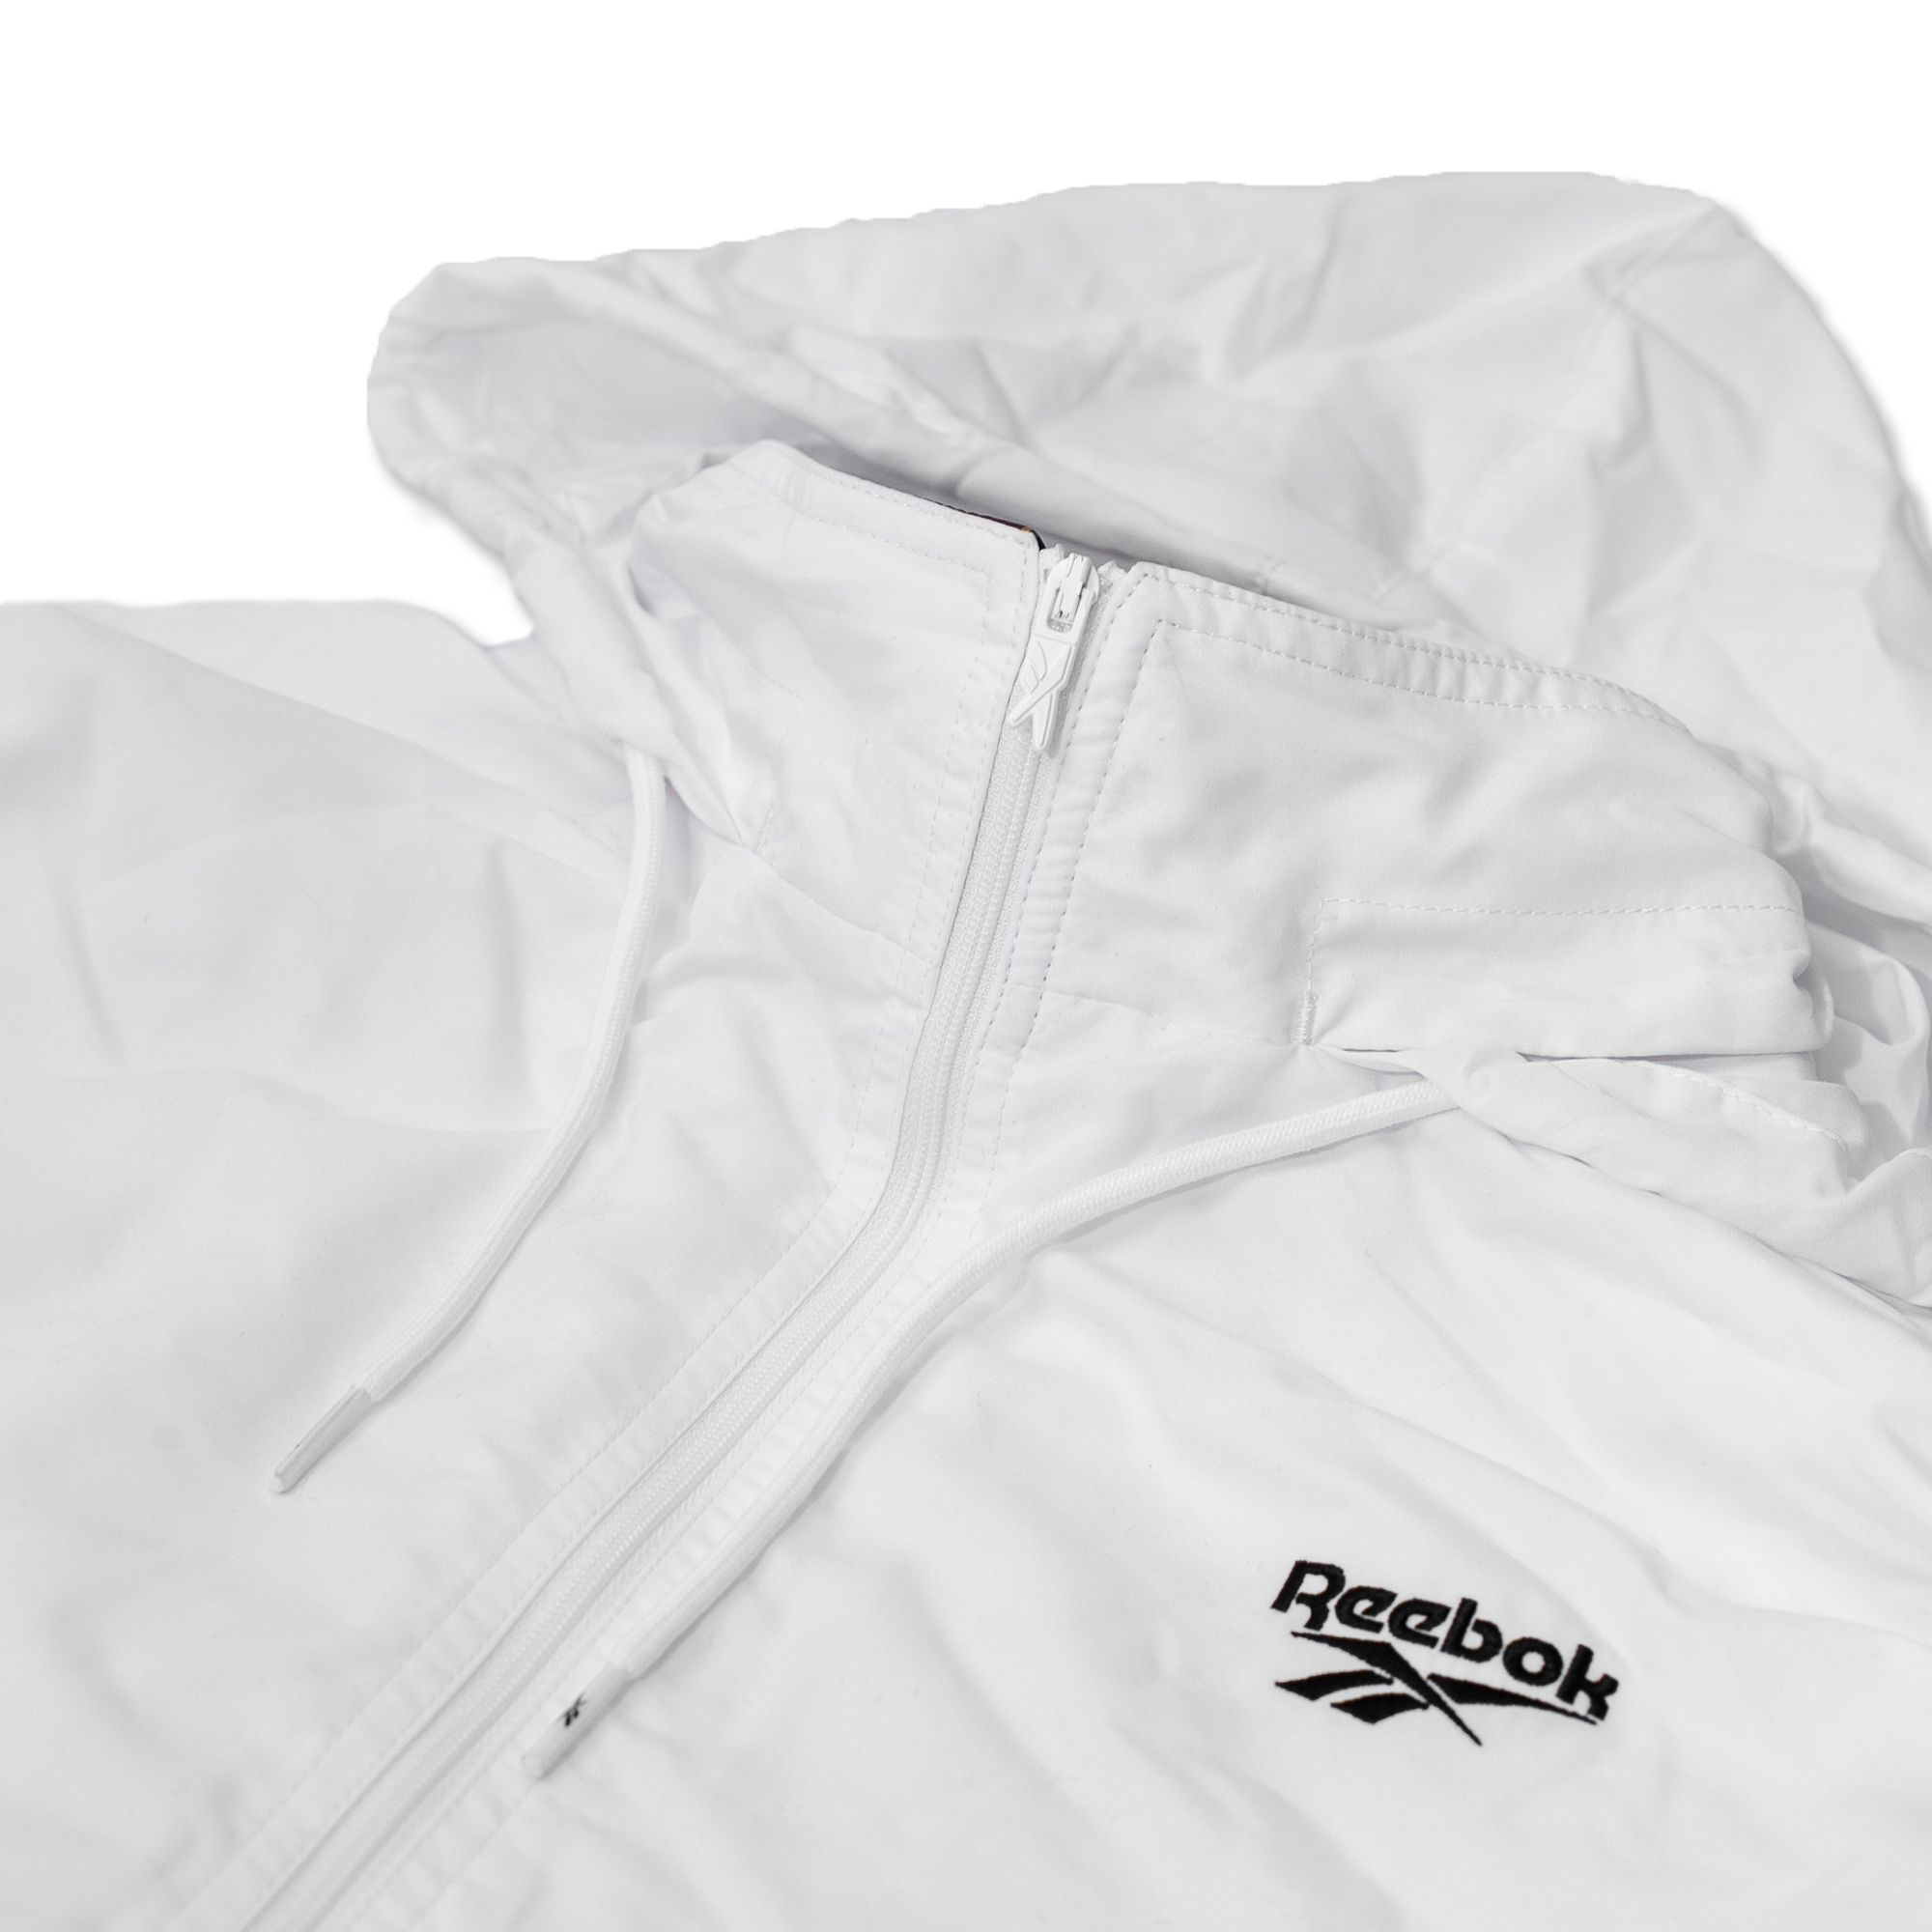  Reebok Classics Anorak Jacket - White/Camo 